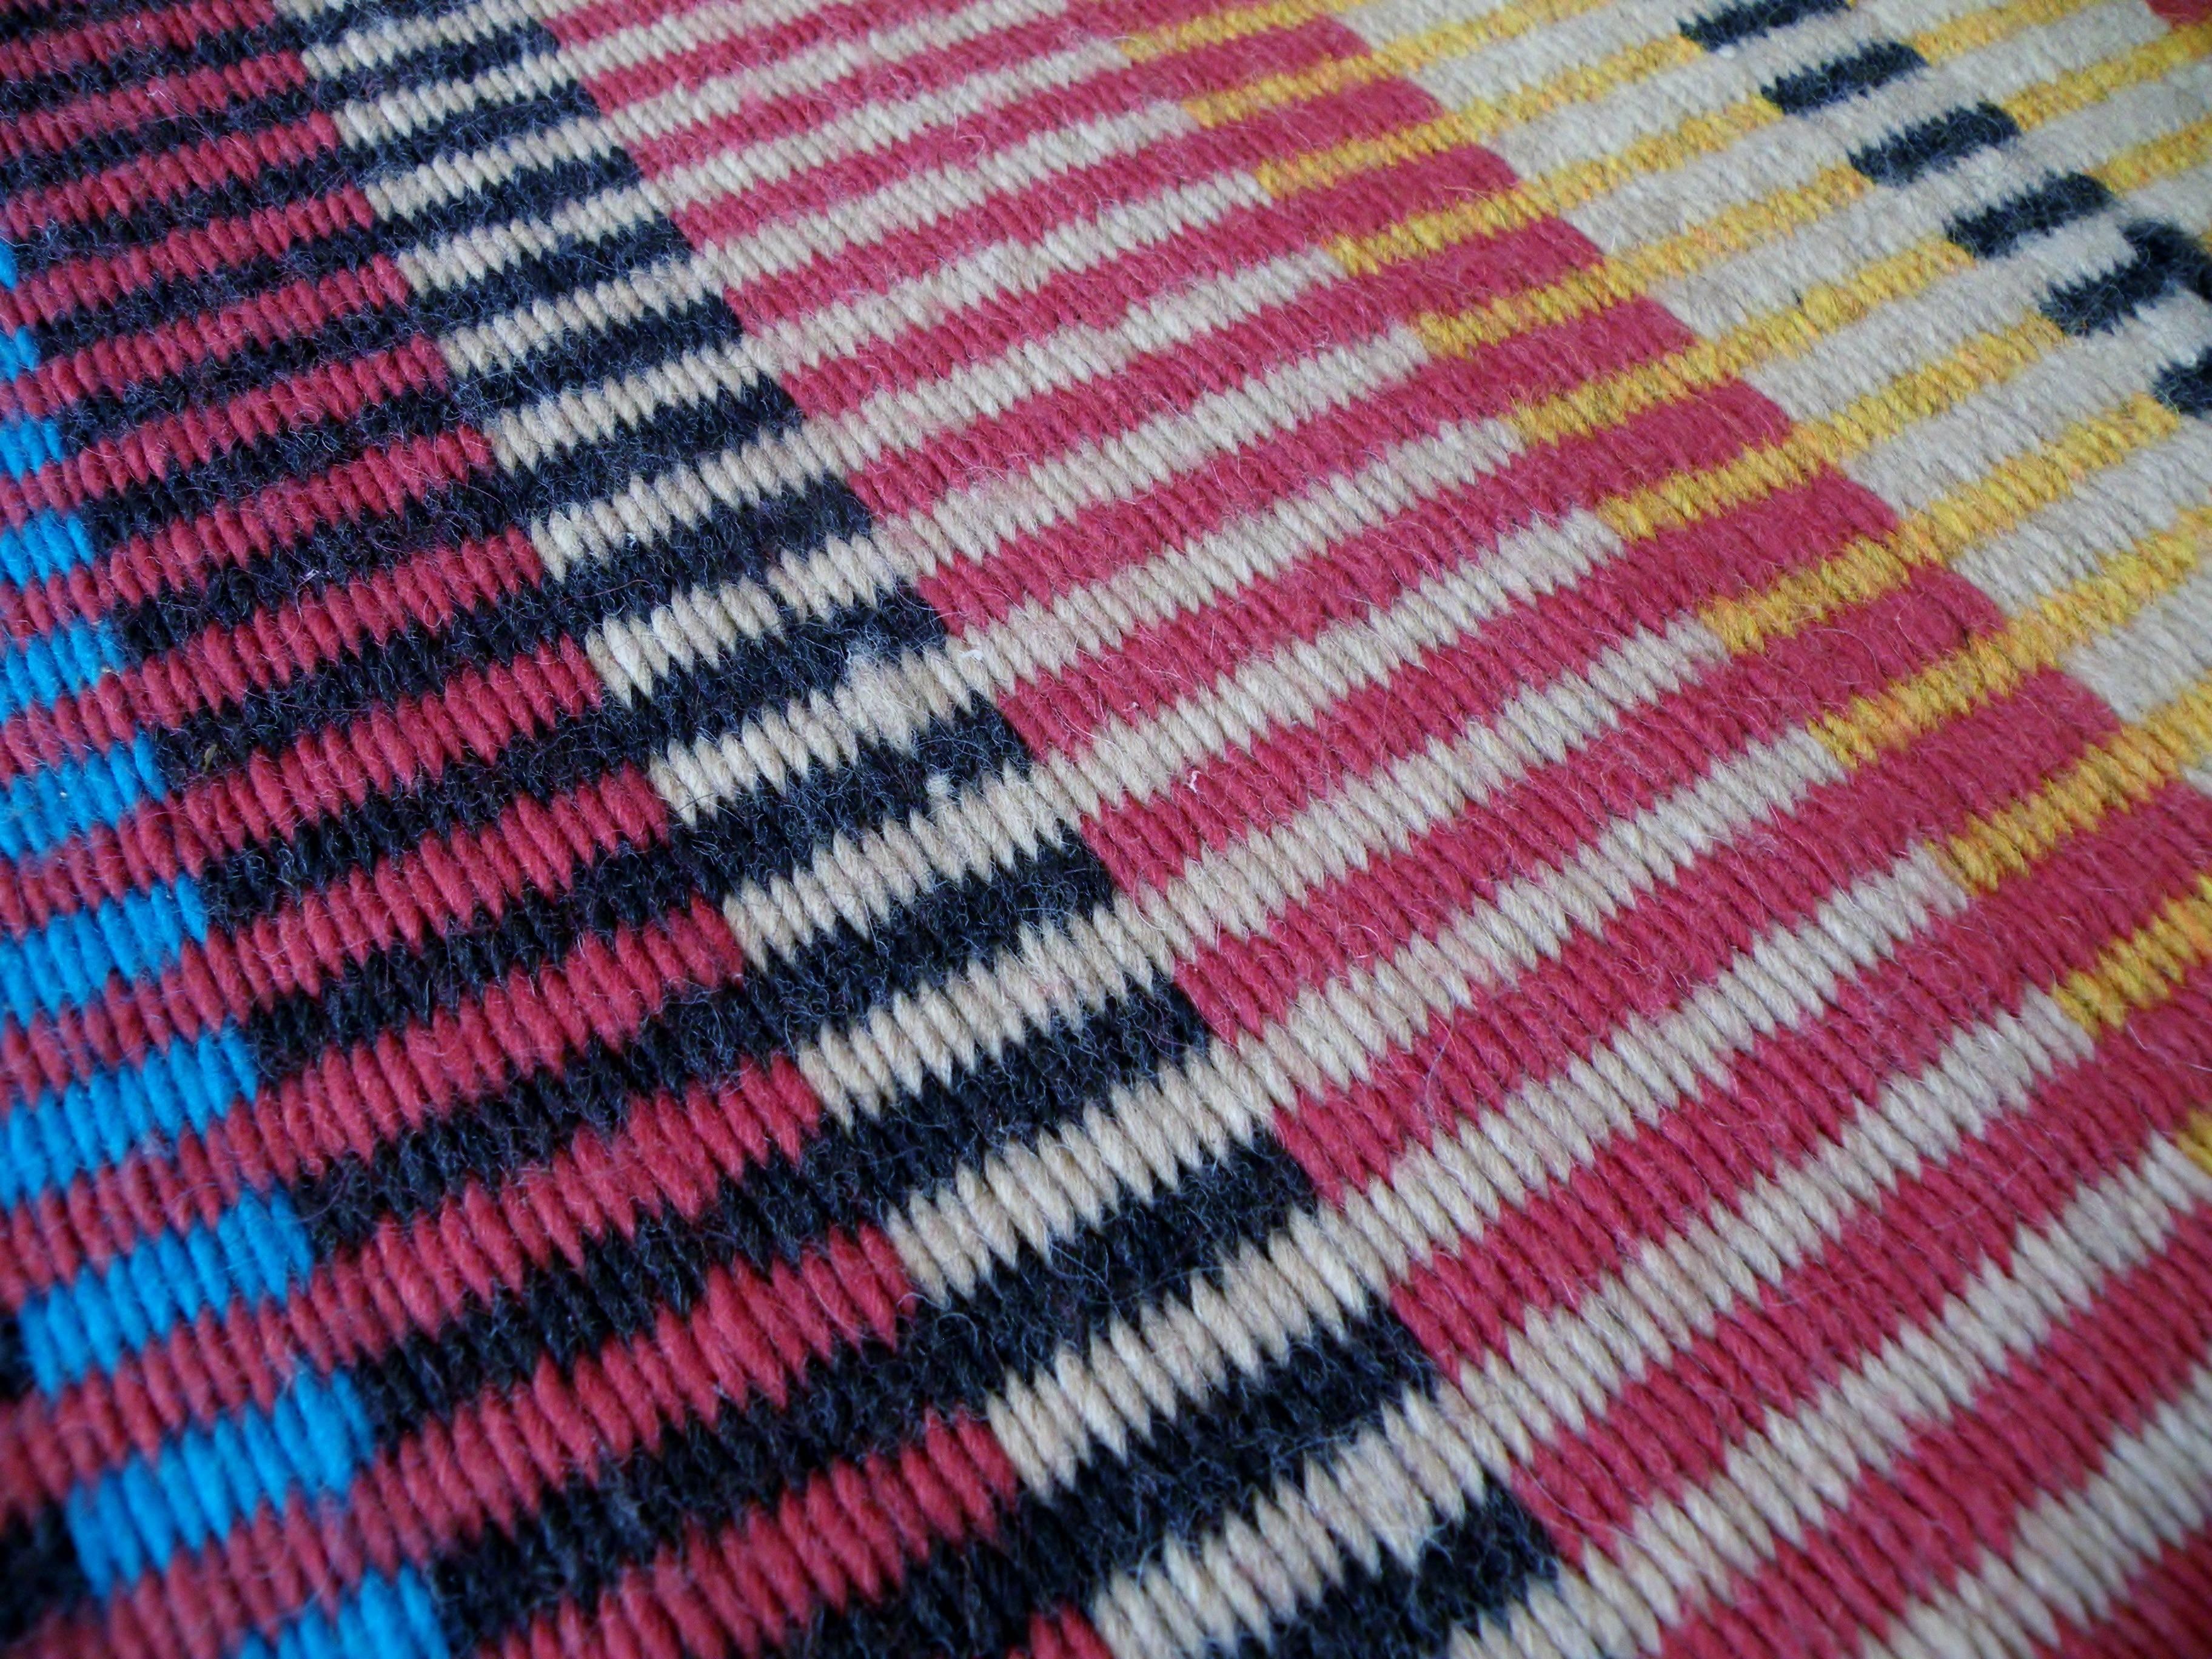 Hand-Woven California Craft Linear Abstract Woven Textile Bauhaus Inspired Rug